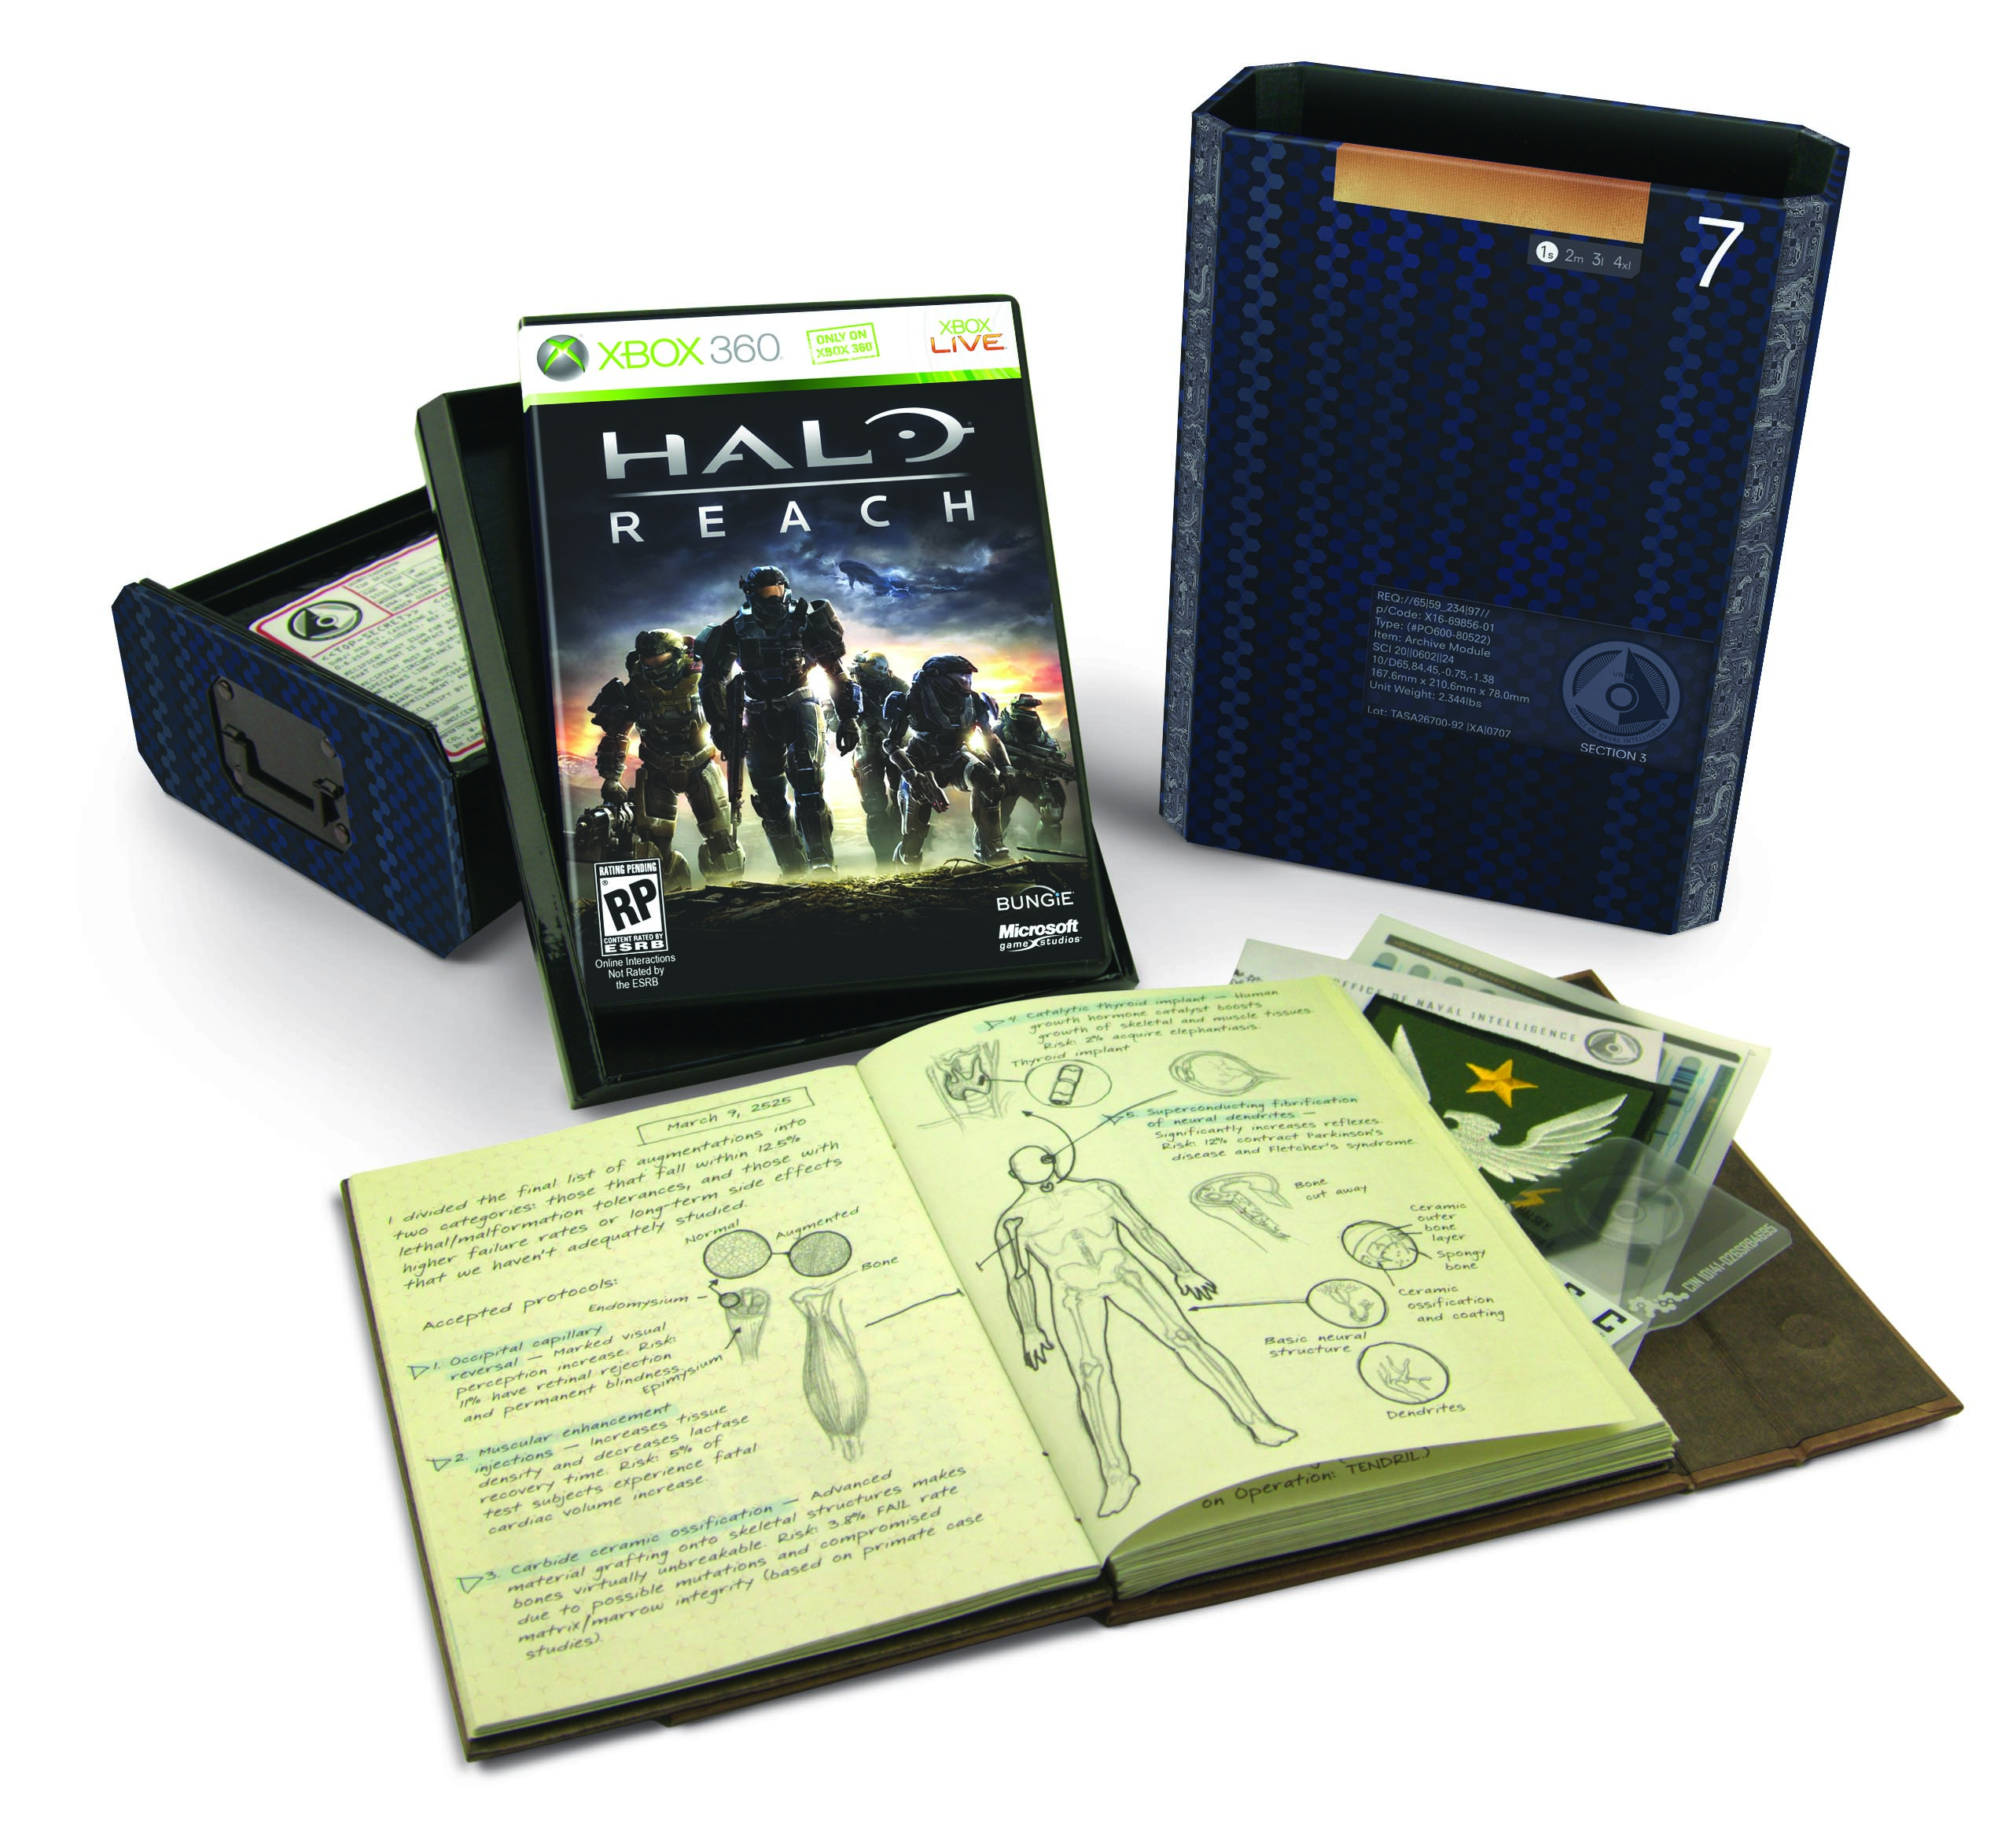 Halo: Reach Limited Edition | Halo 